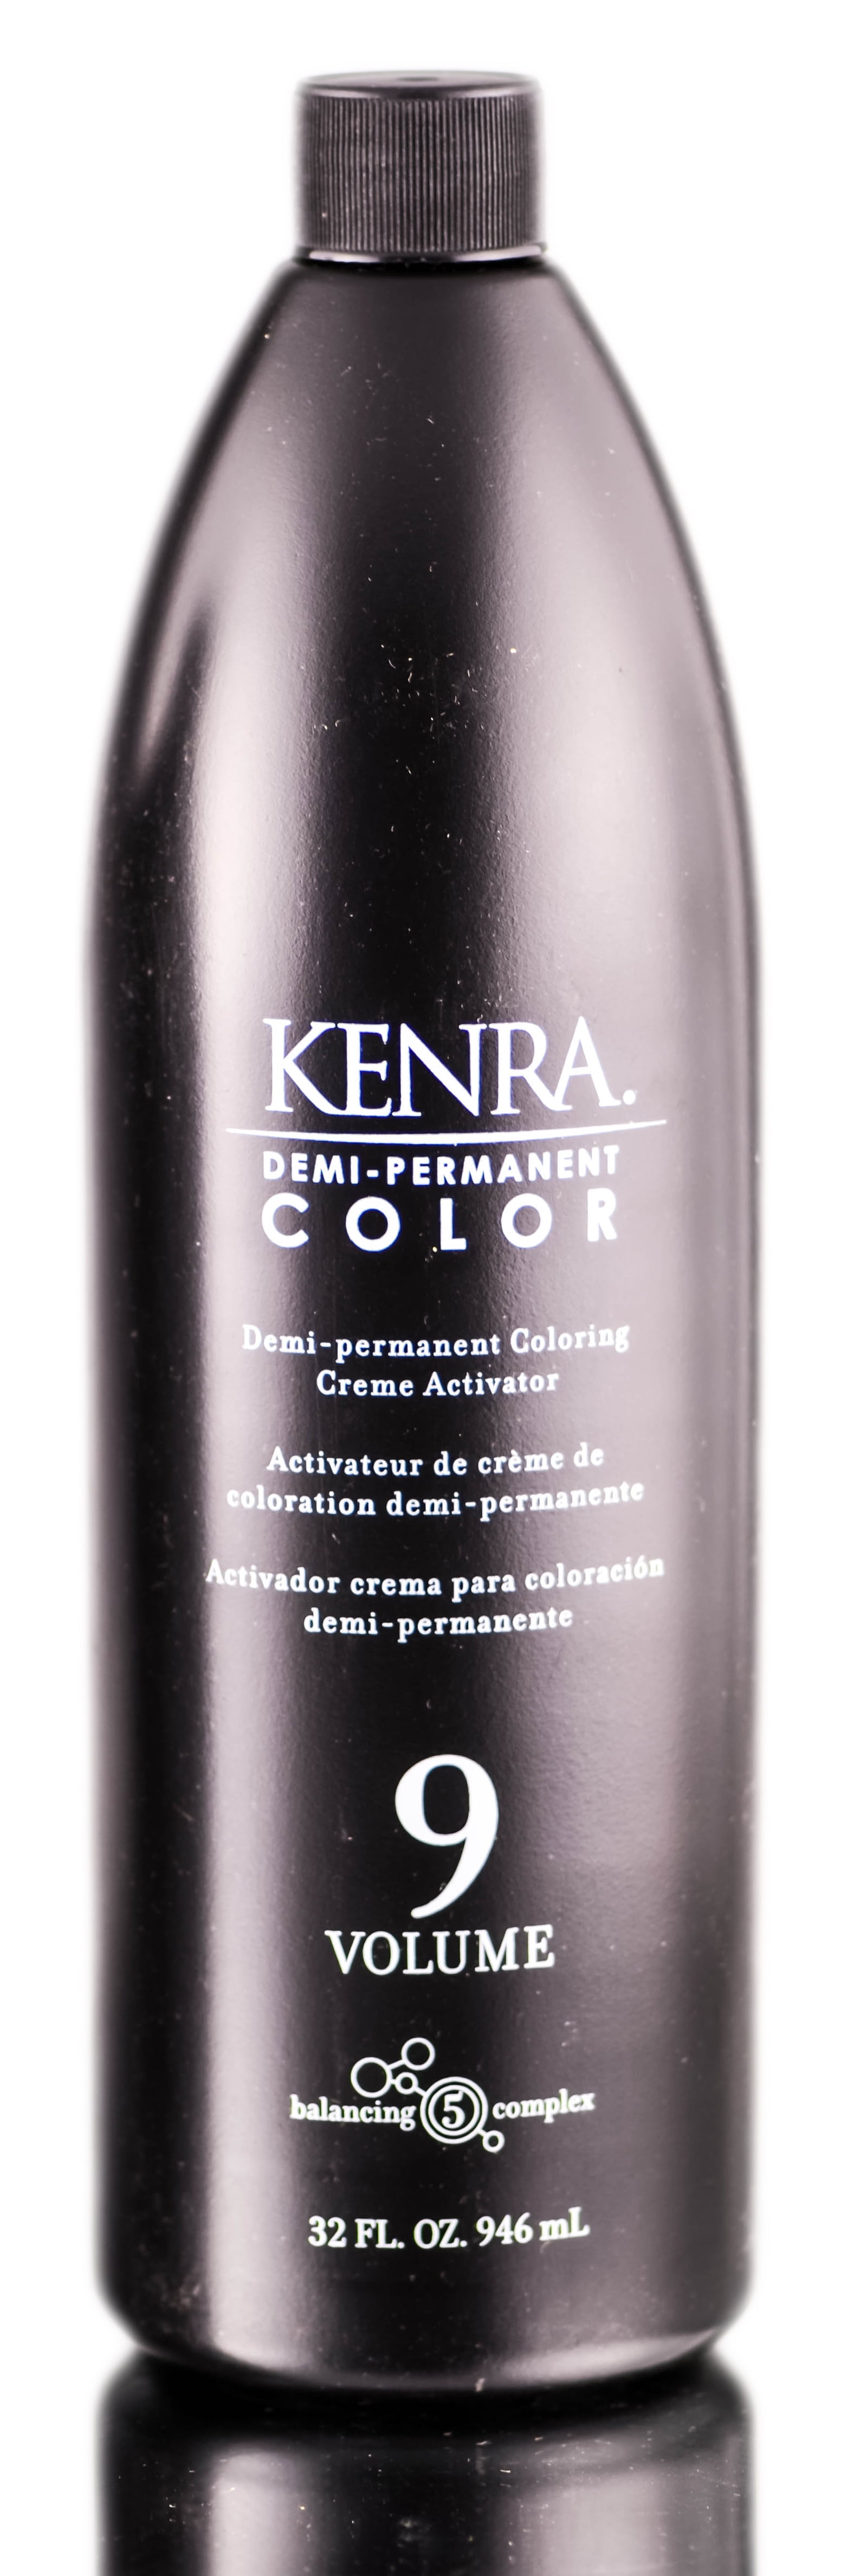 Kenra Color Reset Semi-Permanent Color Remover Creme - 2.5 oz